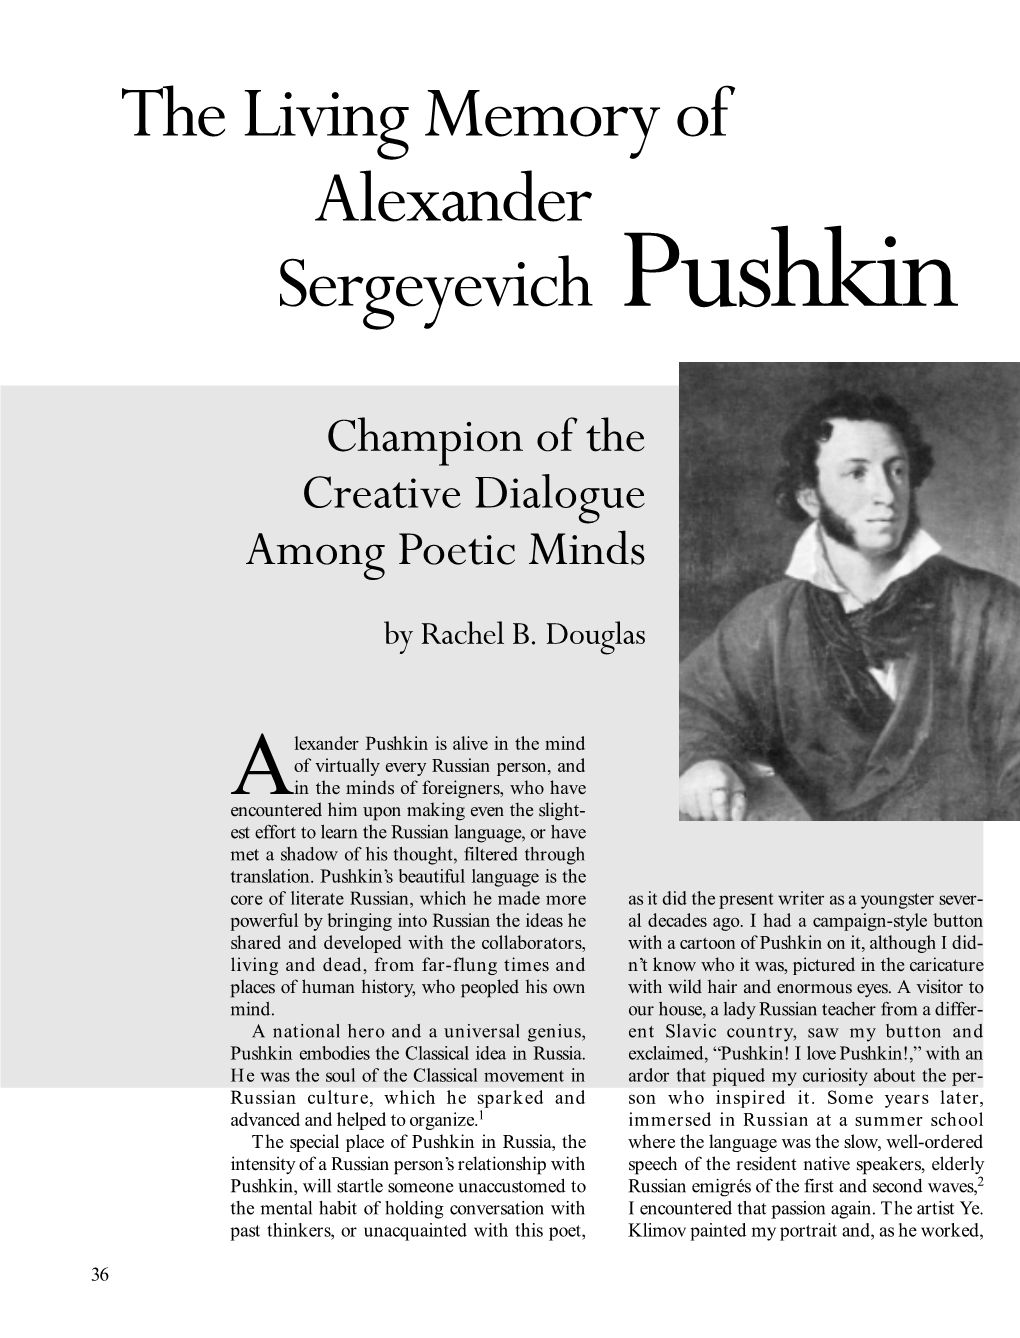 The Living Memory of Pushkin